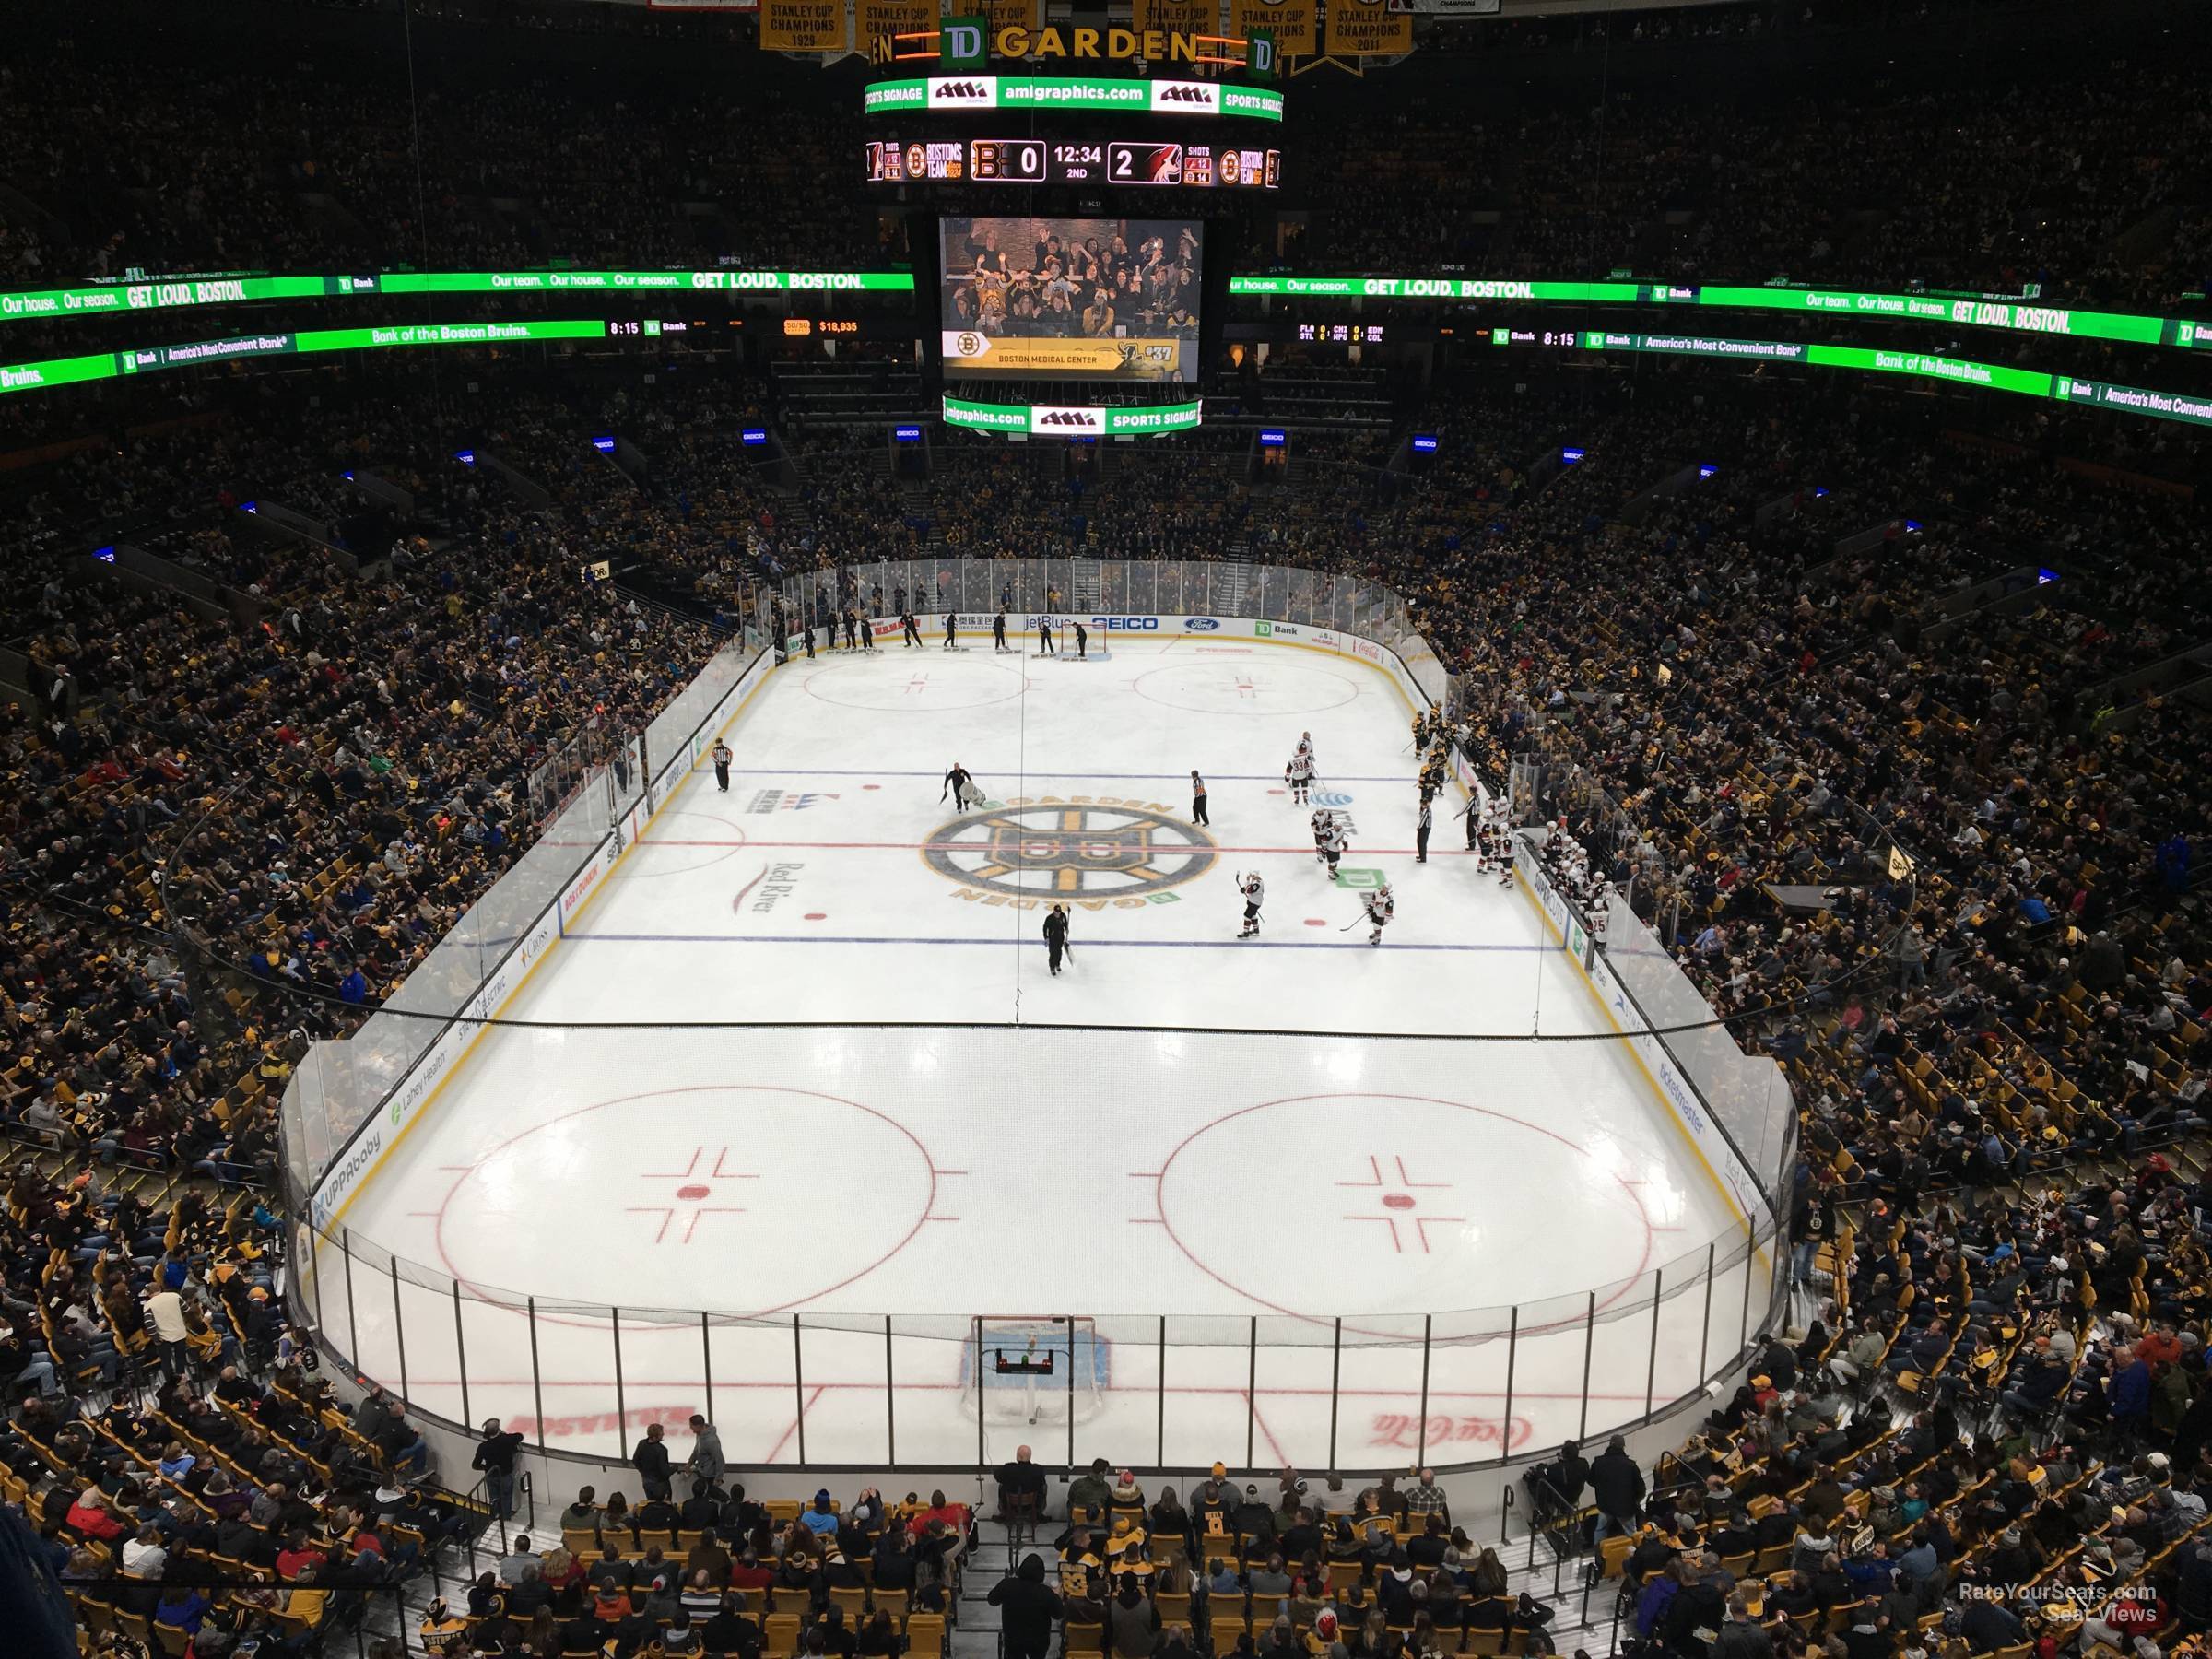 Devils at Bruins Tickets in Boston (TD Garden) - Jan 15, 2024 at 1